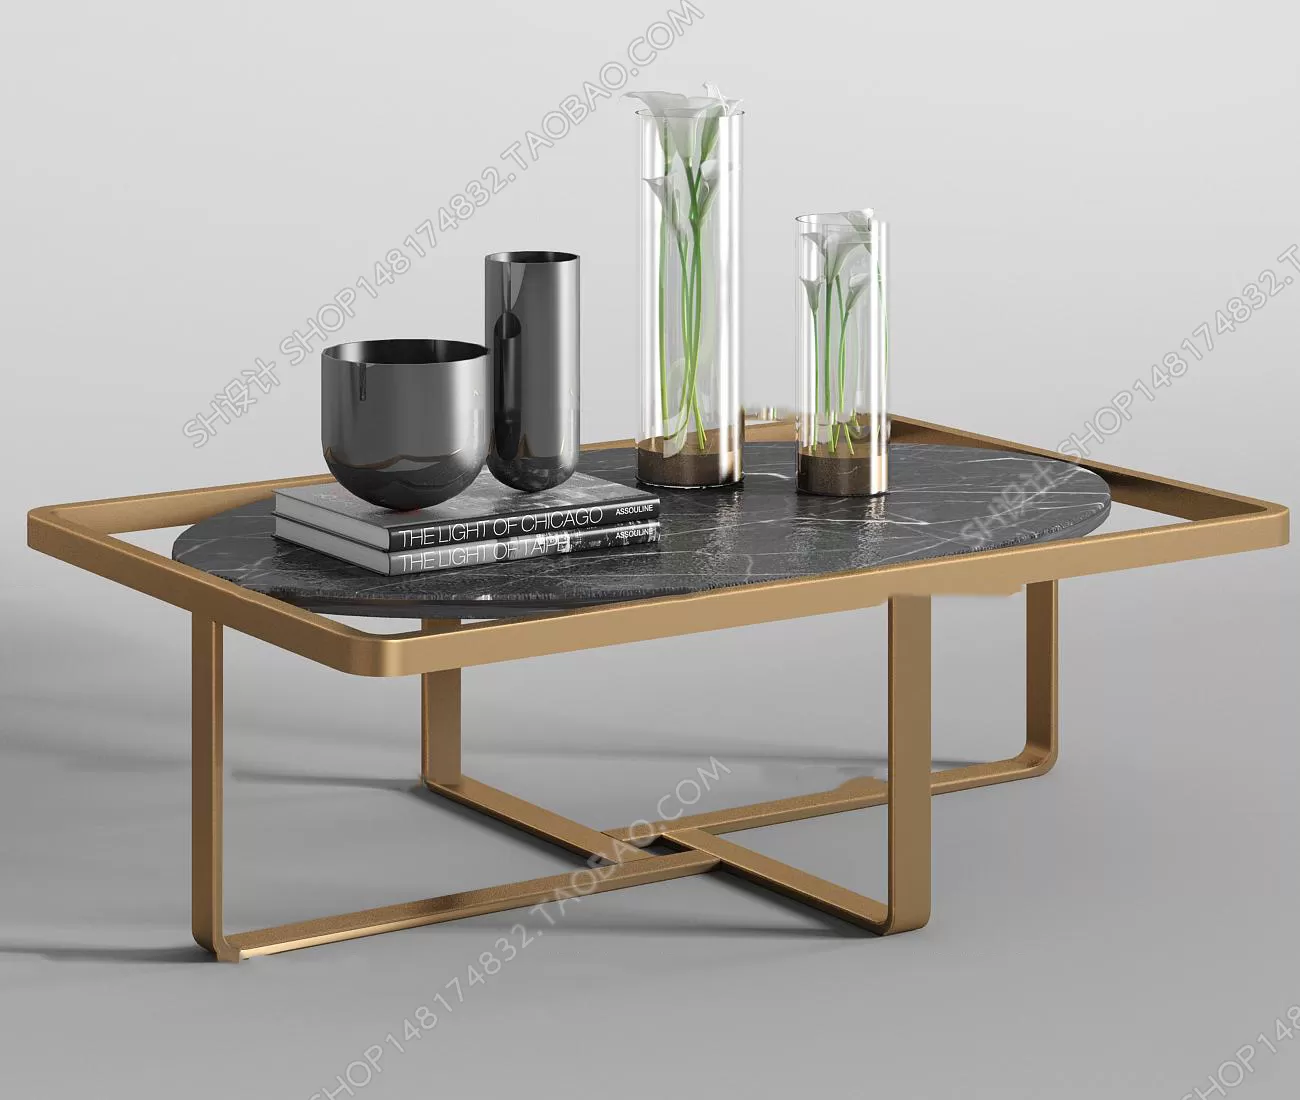 3DSKY MODELS – COFFEE TABLE 3D MODELS – 035